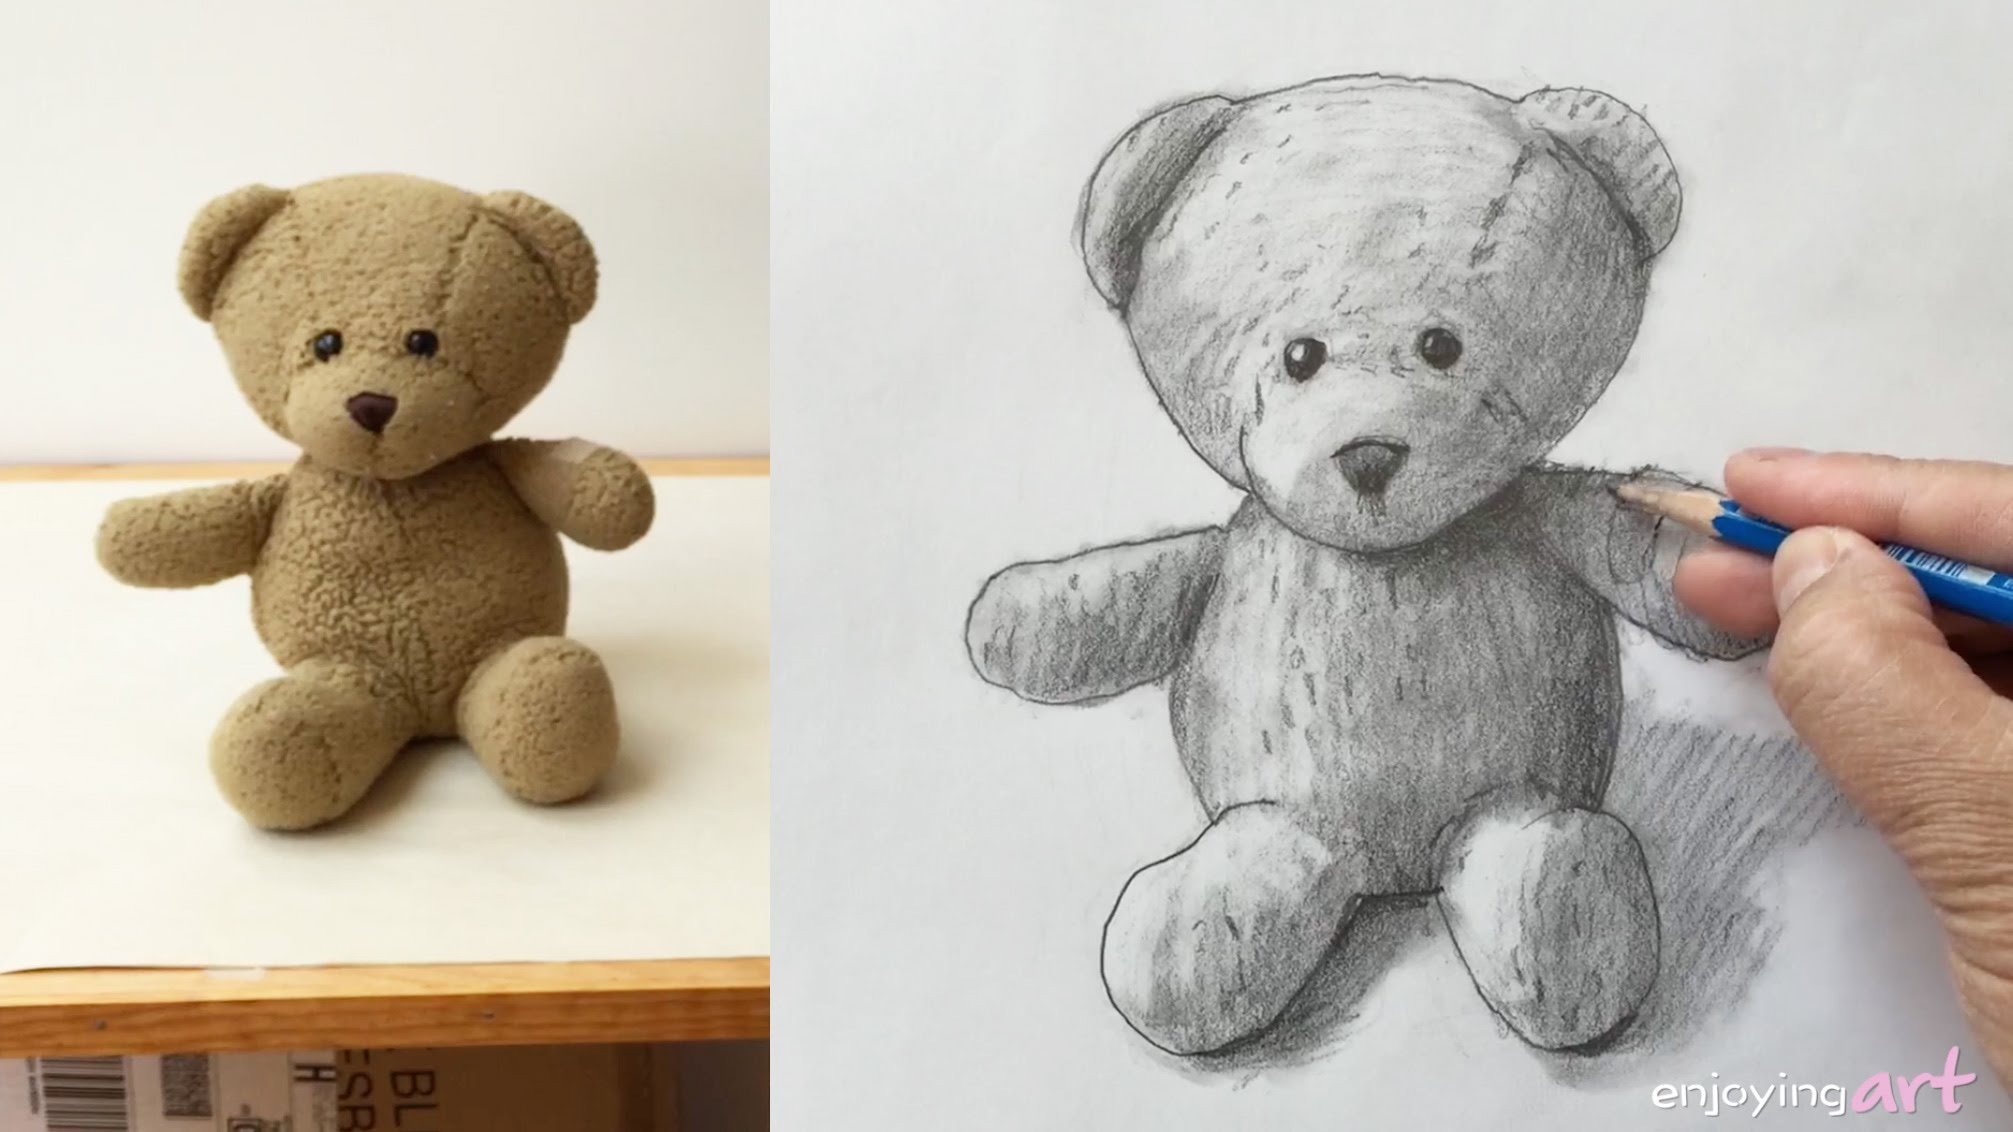 Pencil Sketch Of Teddy Bear at Explore collection